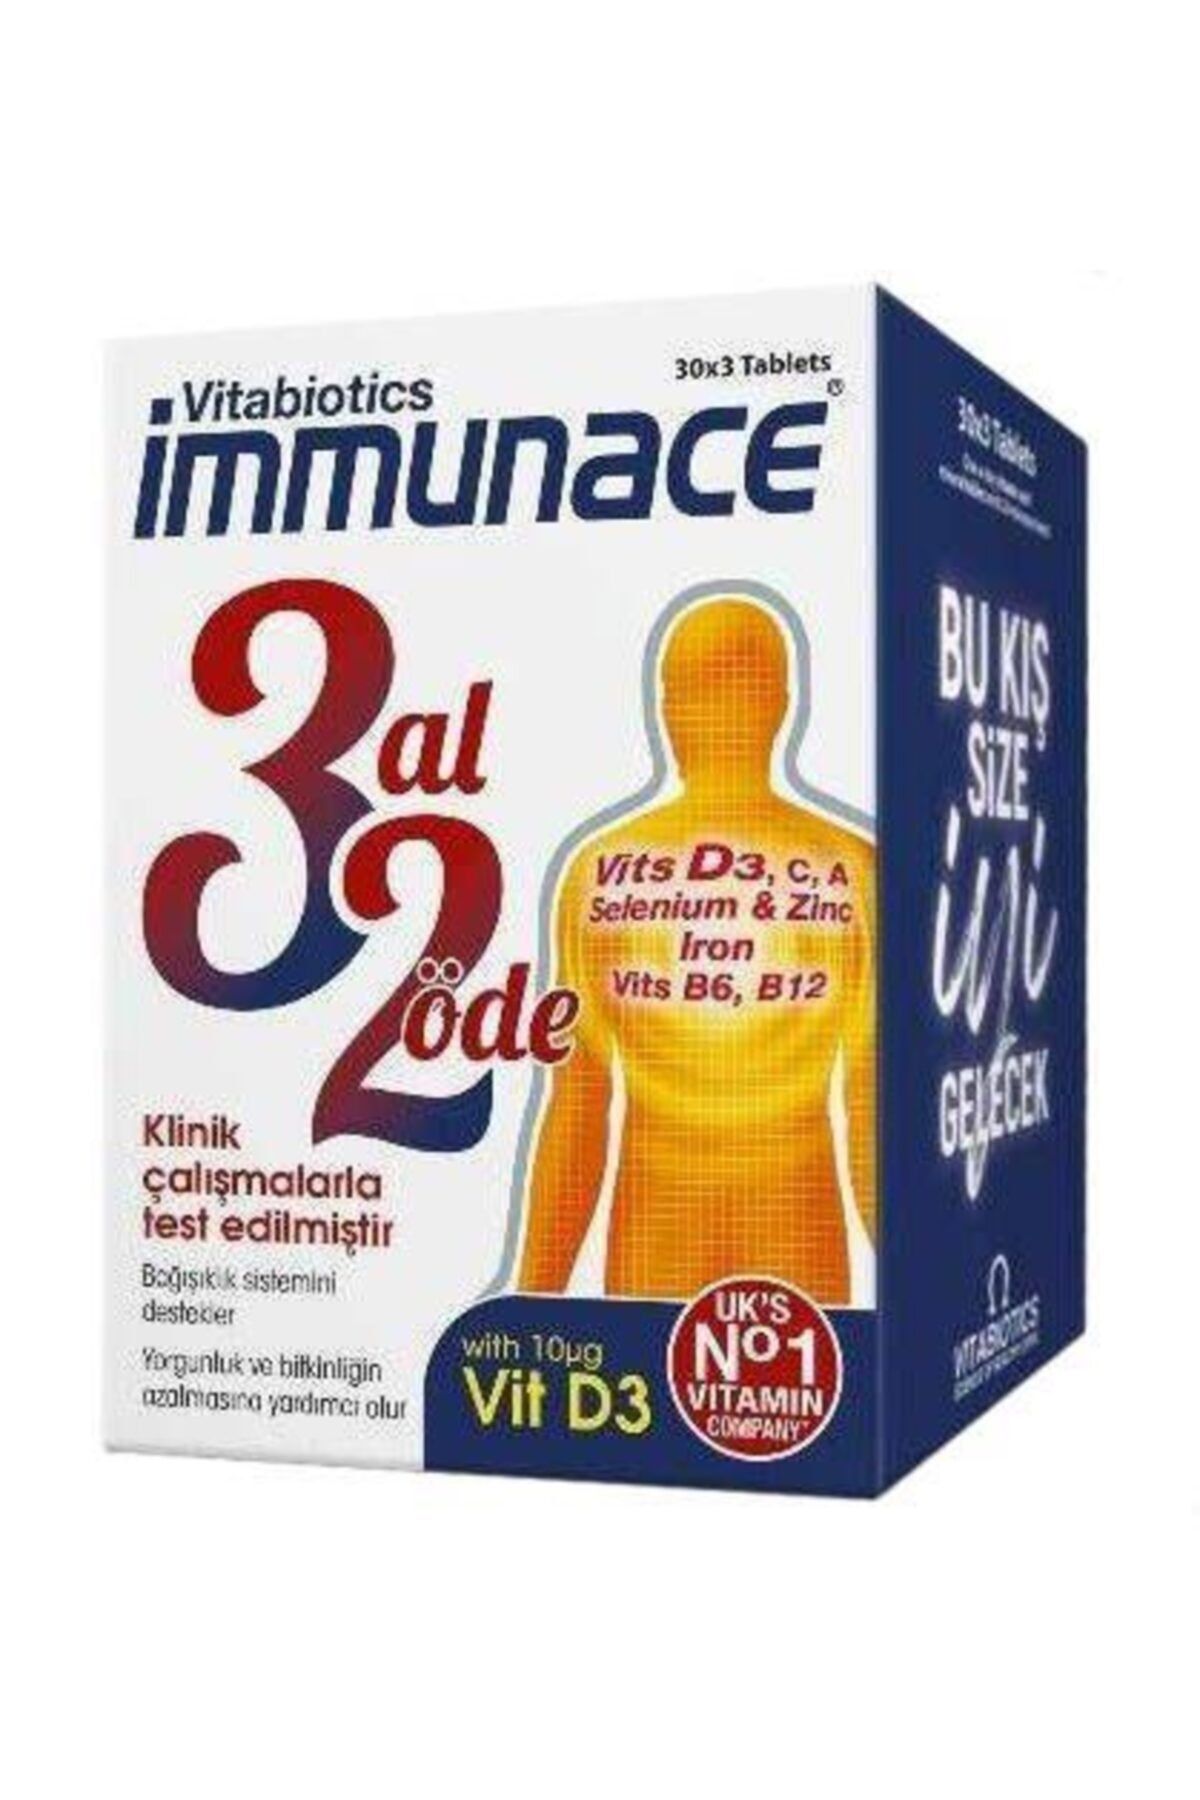 Immunace Original 90 Tablet